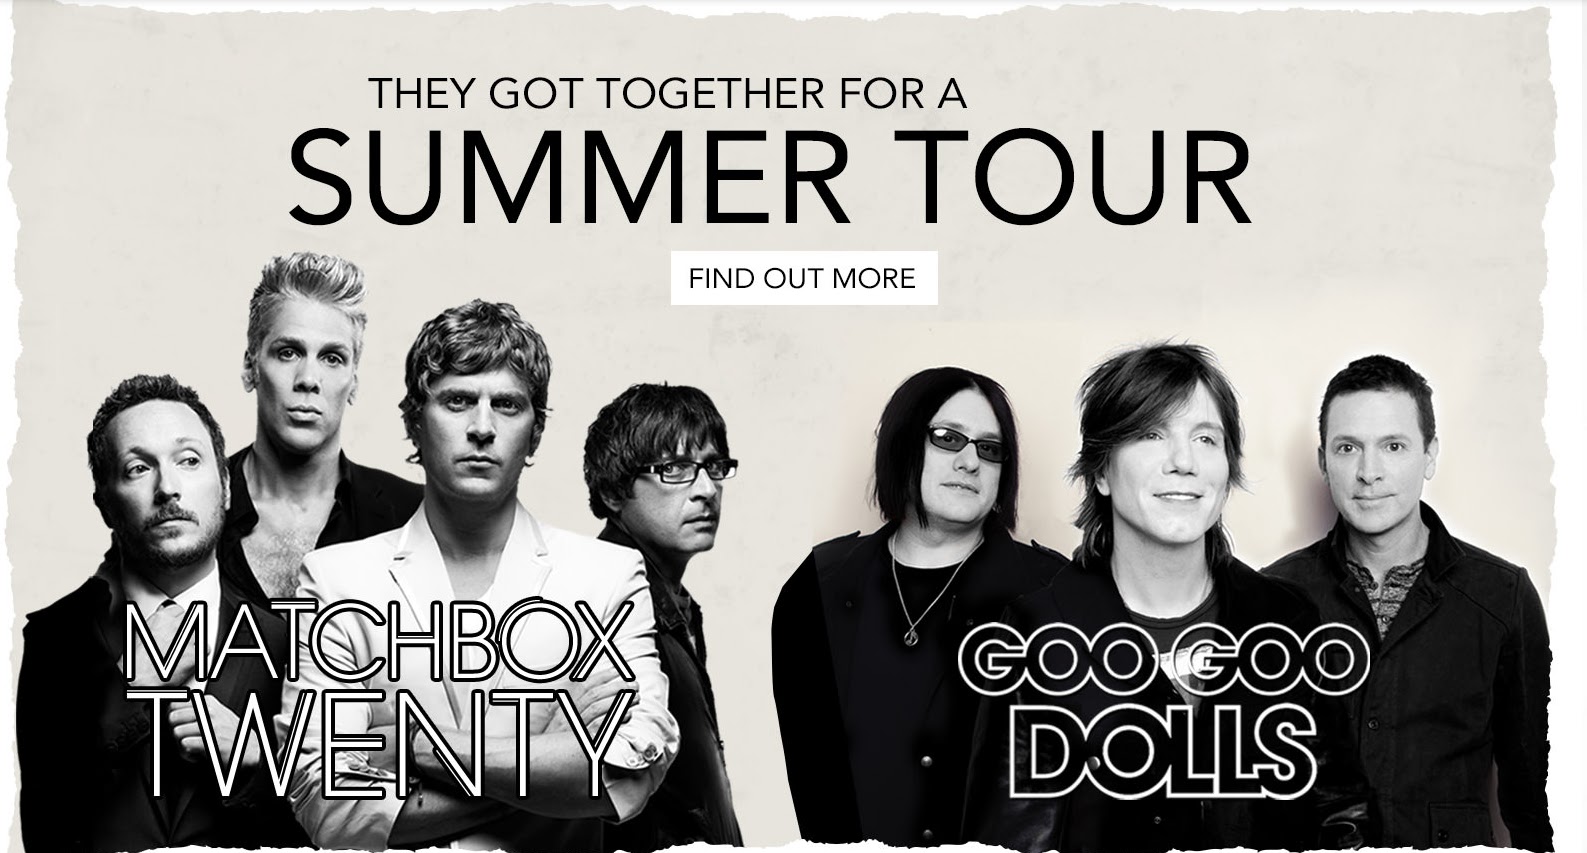 Coupon STL: Groupon St Louis - Matchbox Twenty and Goo Goo Dolls Concert Tickets